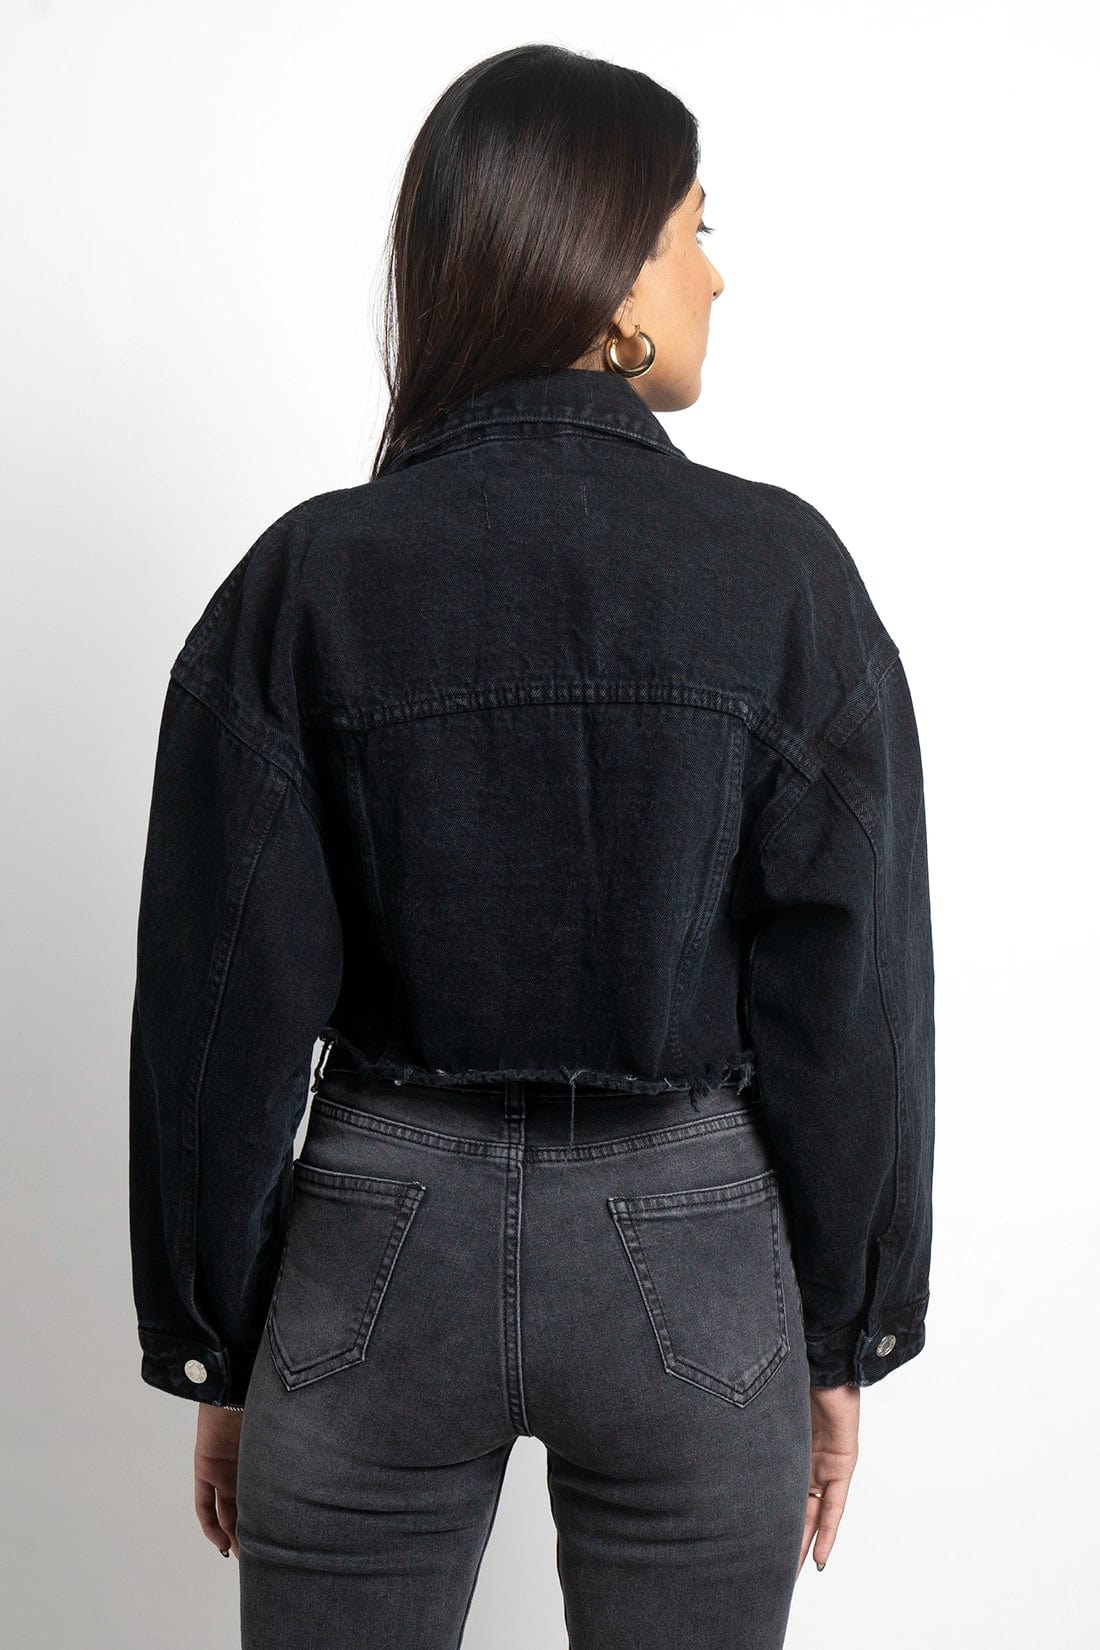 Buy Black Jackets & Coats for Men by LEVIS Online | Ajio.com